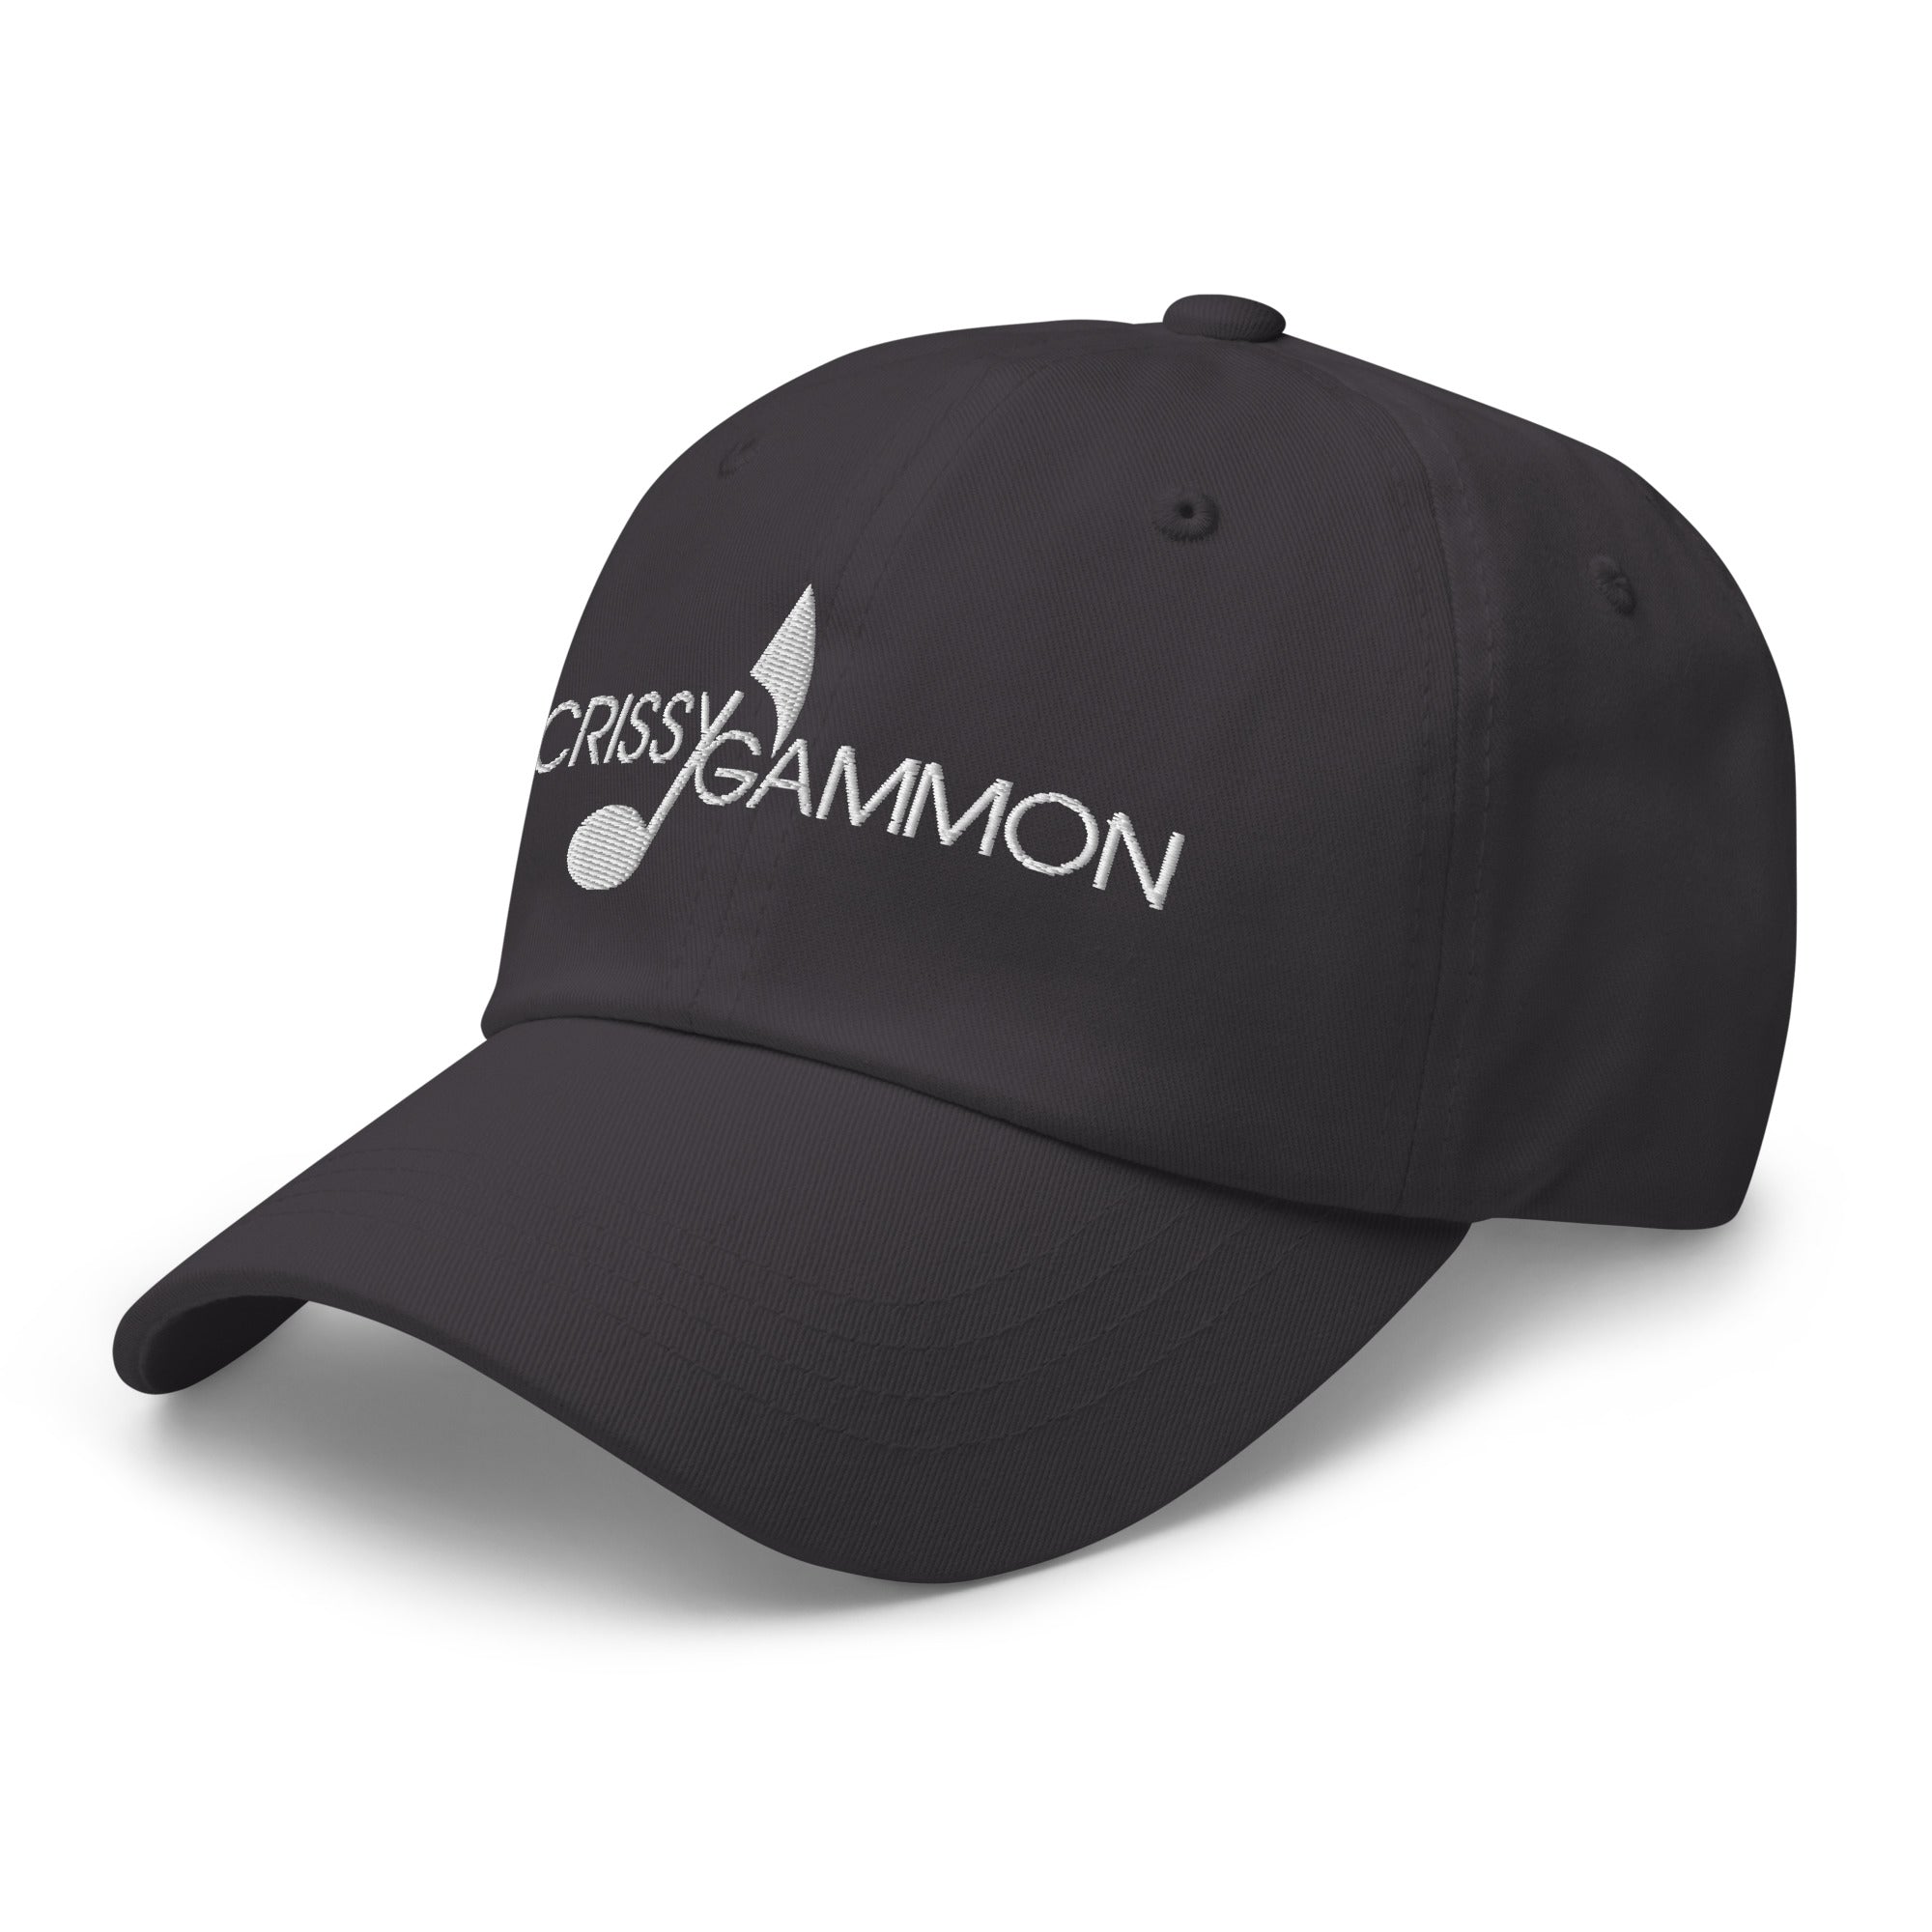 Crissy Gammon - Dad hat